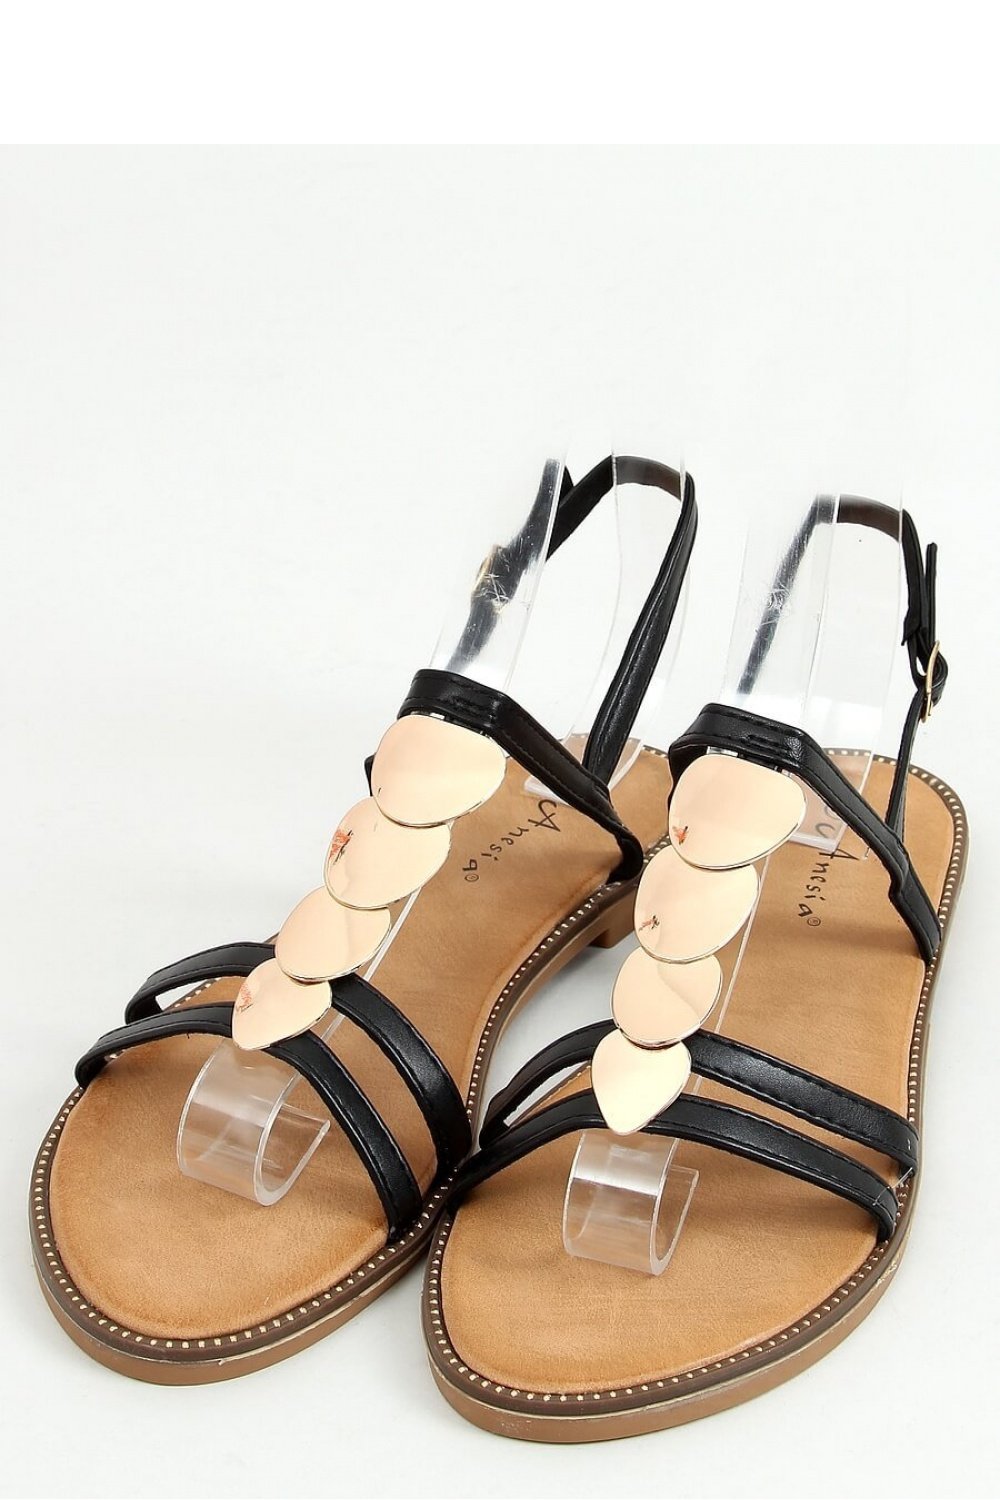 Sandals model 156046 Inello Posh Styles Apparel